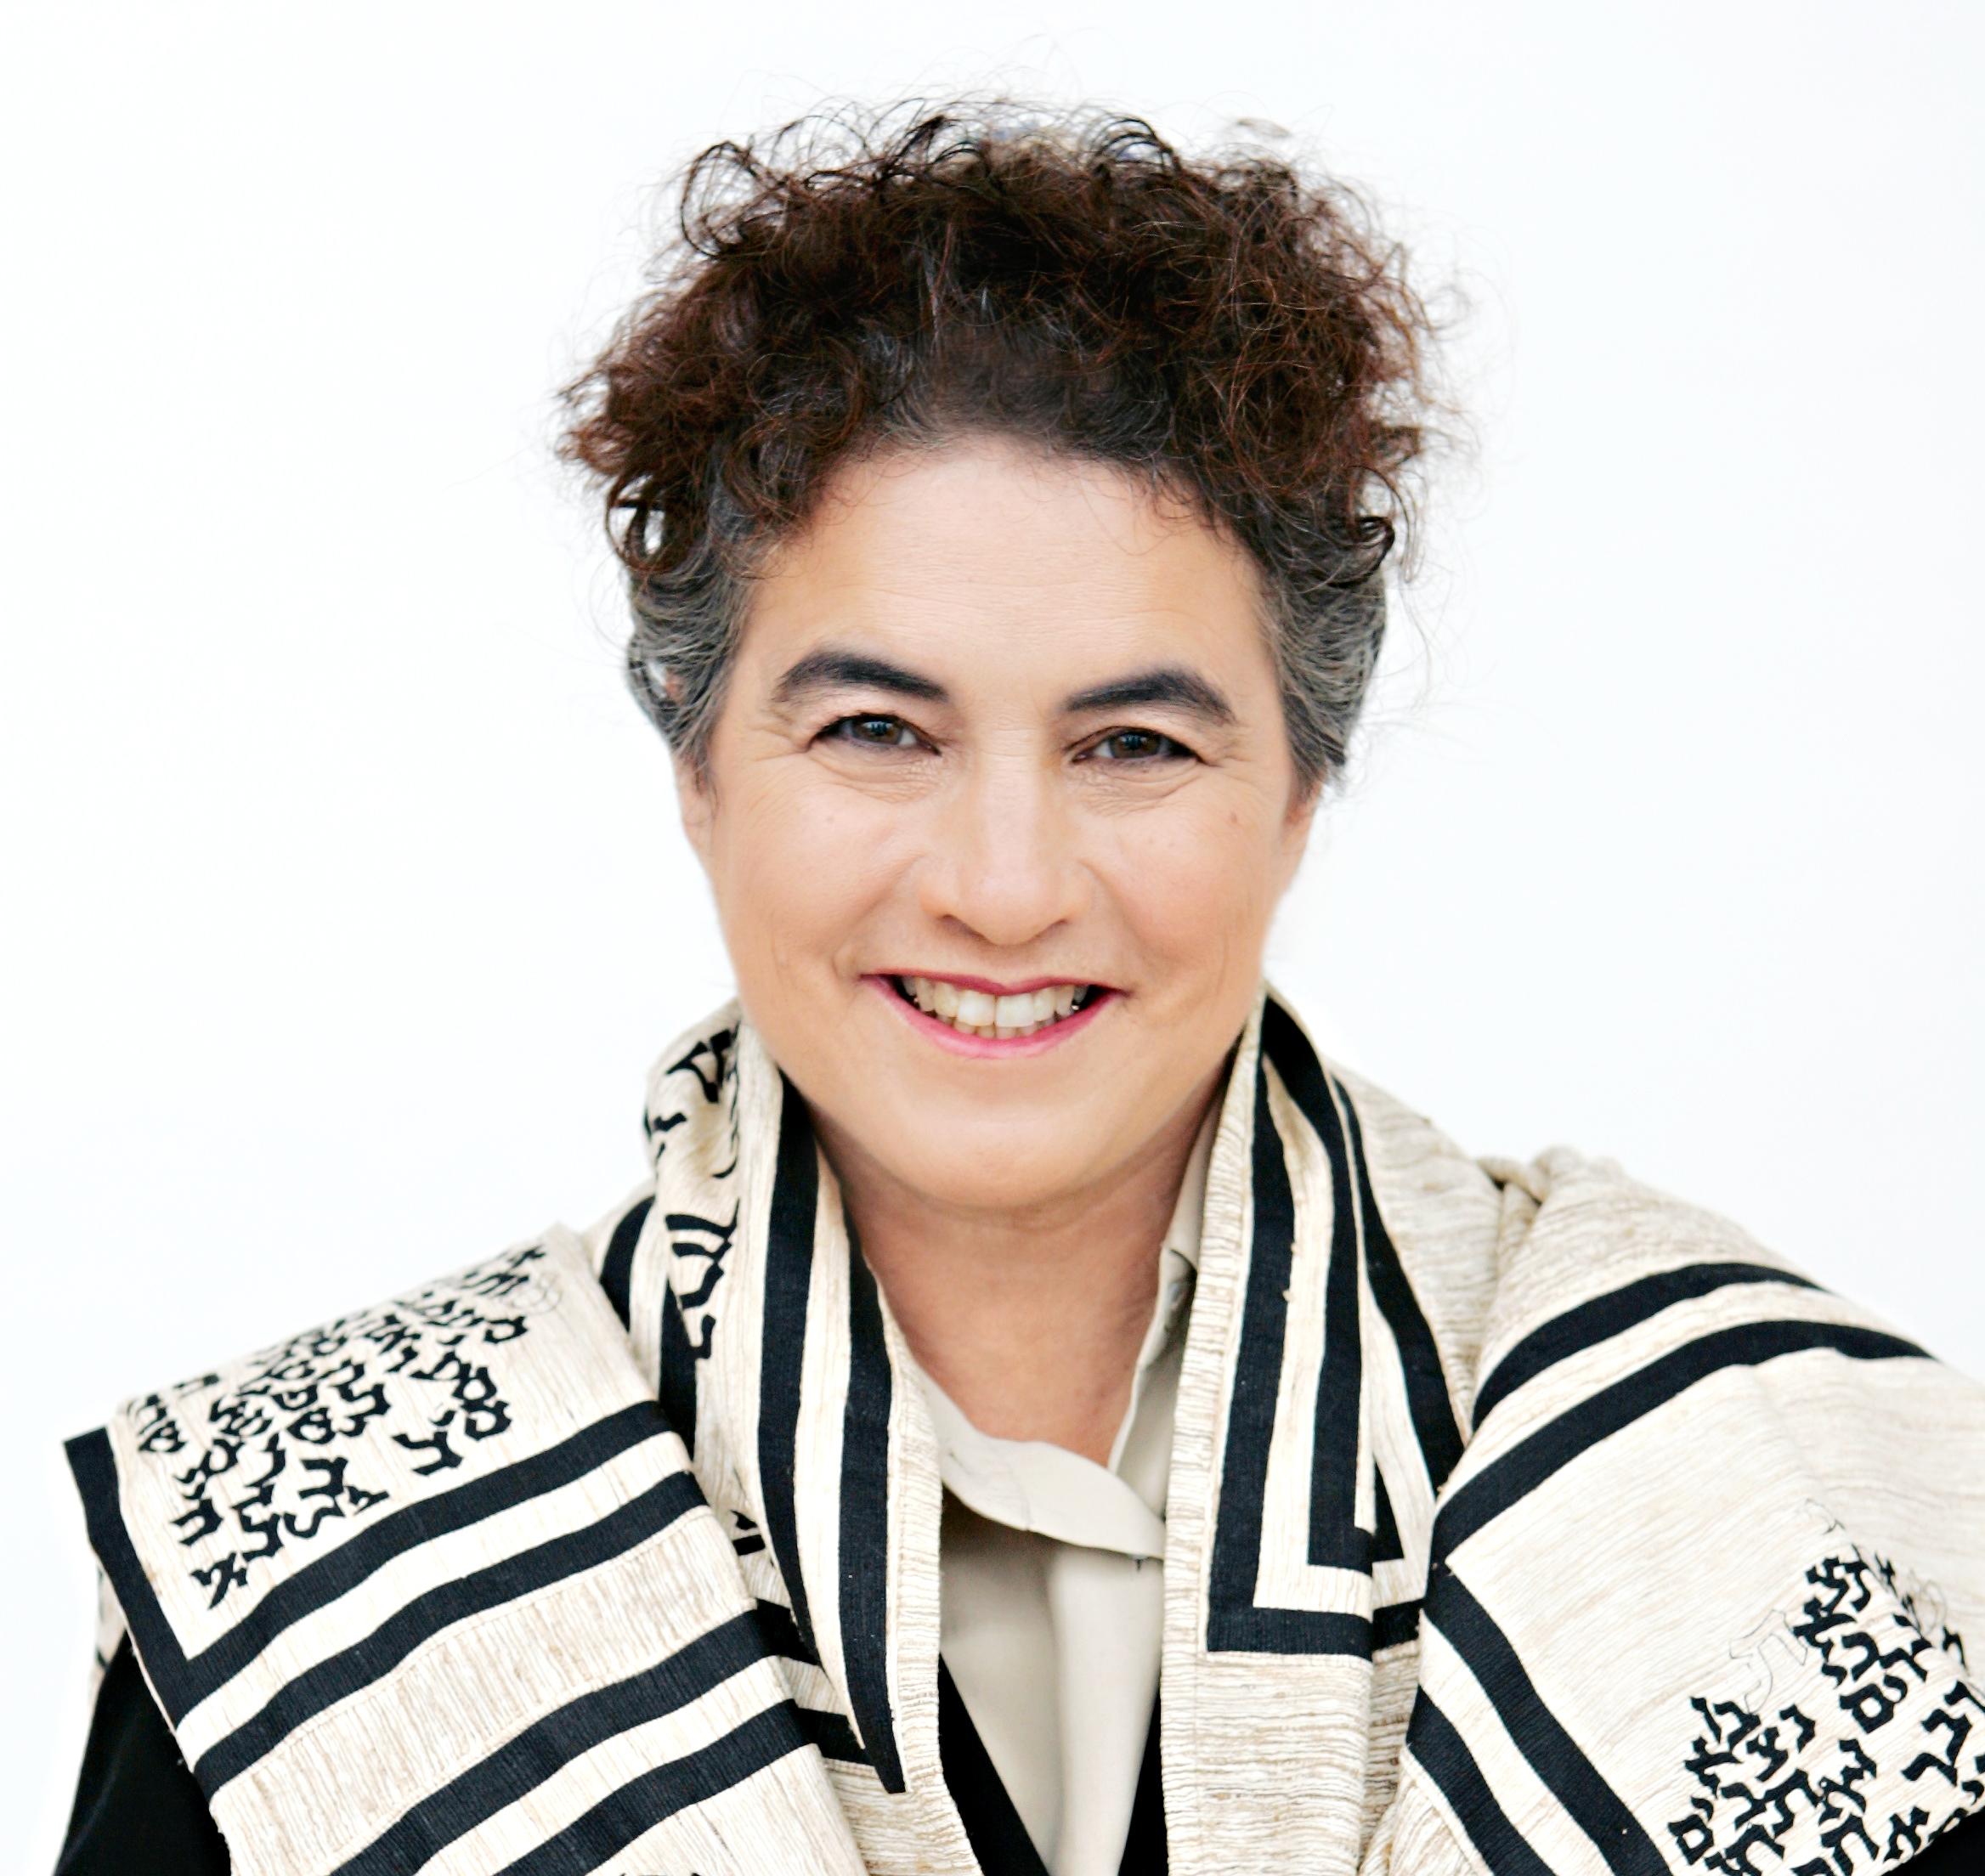 Rabbi Jane Litman